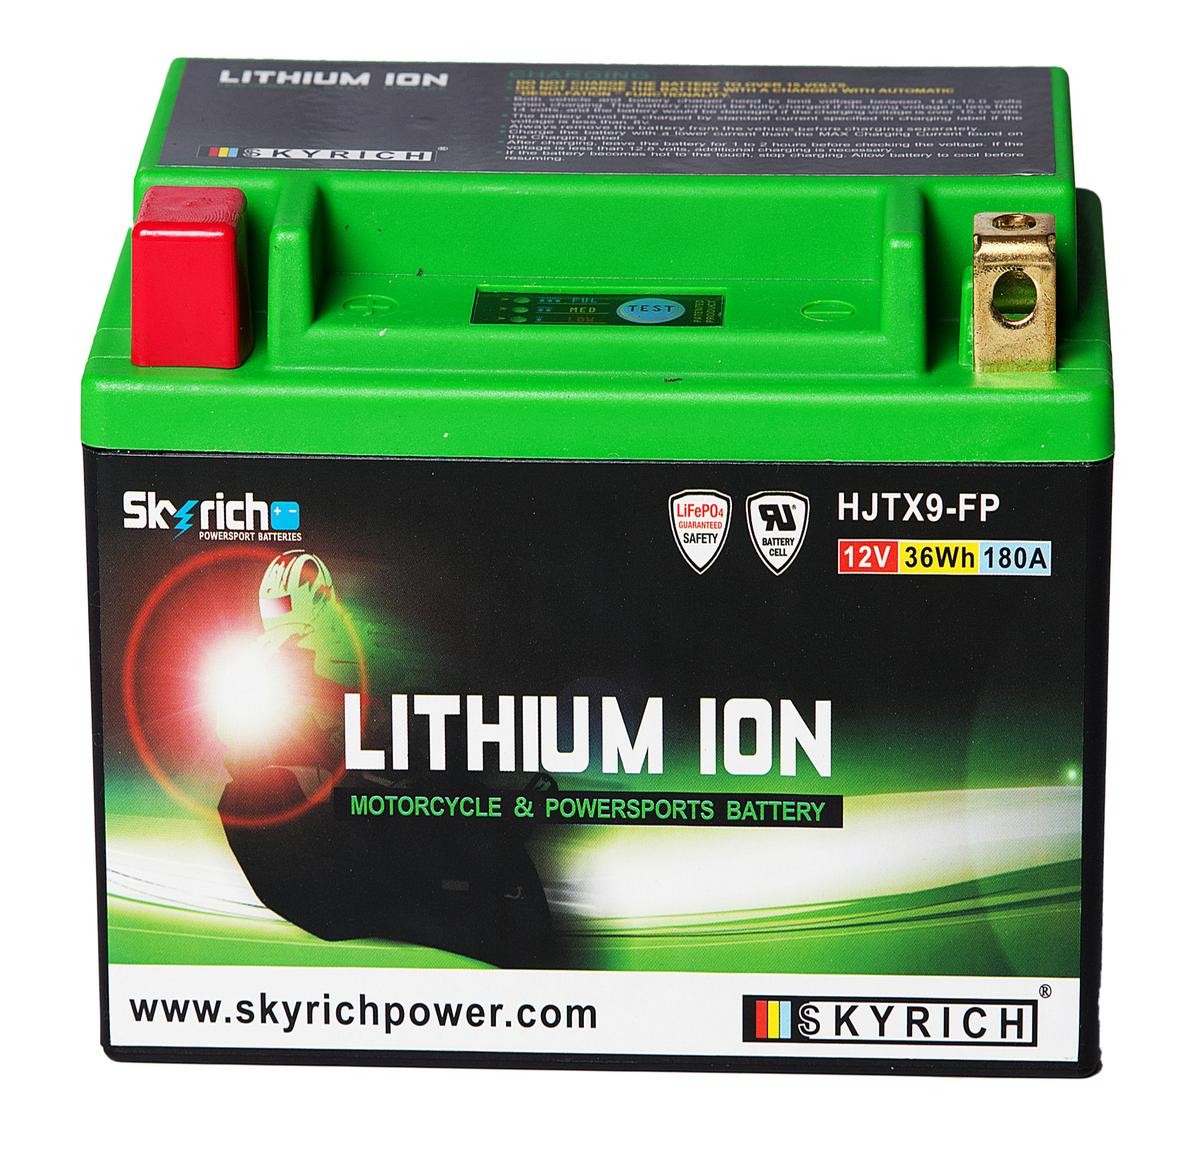 TRIUMPH DAYTONA Batterie 12V 3Ah 180A N Li-Ionen-Batterie SKYRICH LITHIUM ION HJTX9-FP